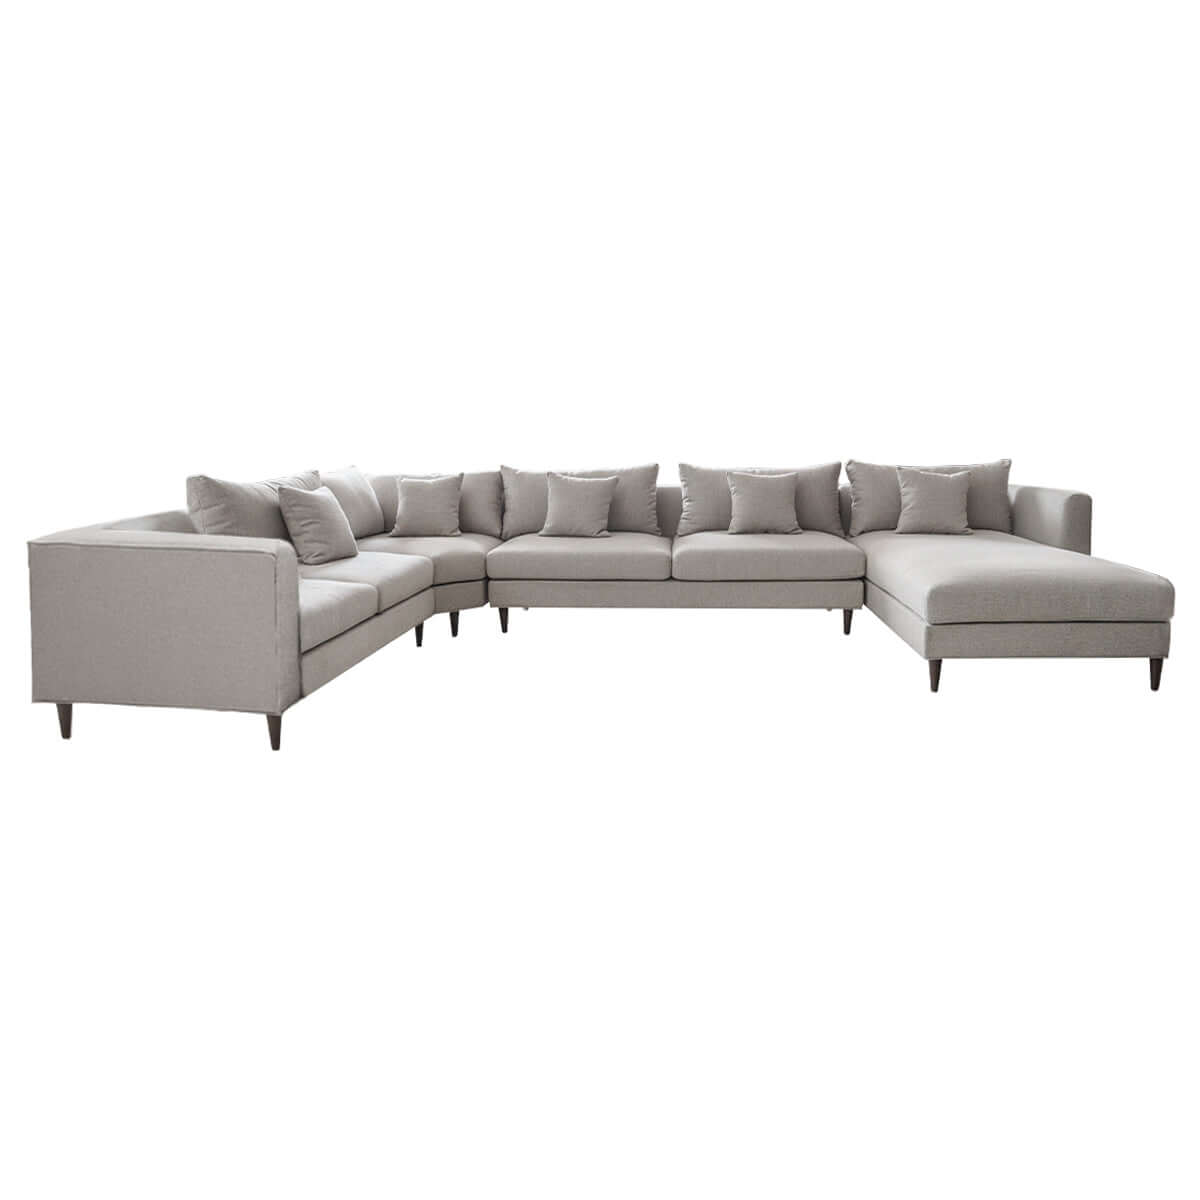 Online furniture Indonesia - Slimline U-Shape sofa